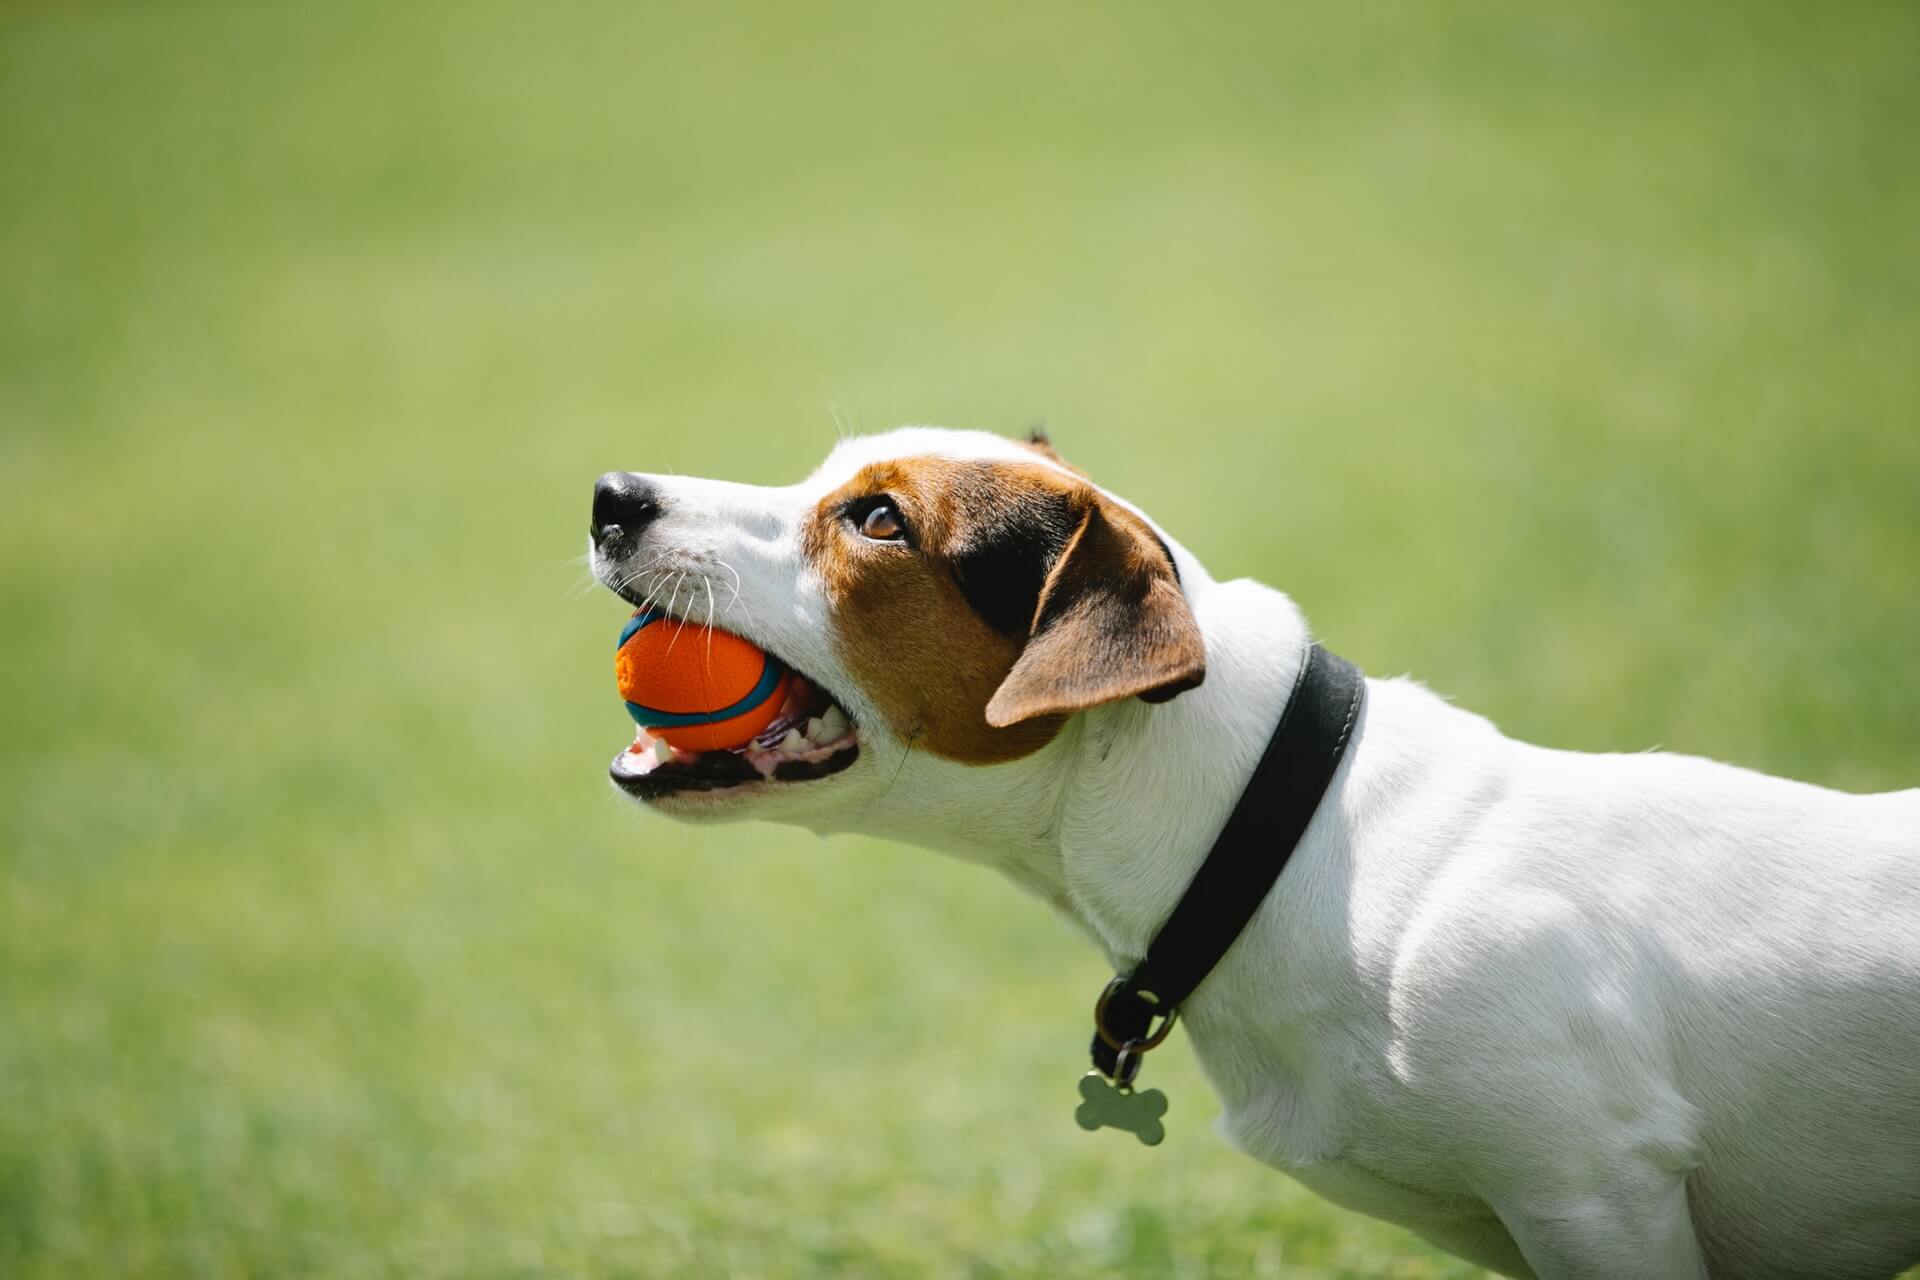 dog toy ball